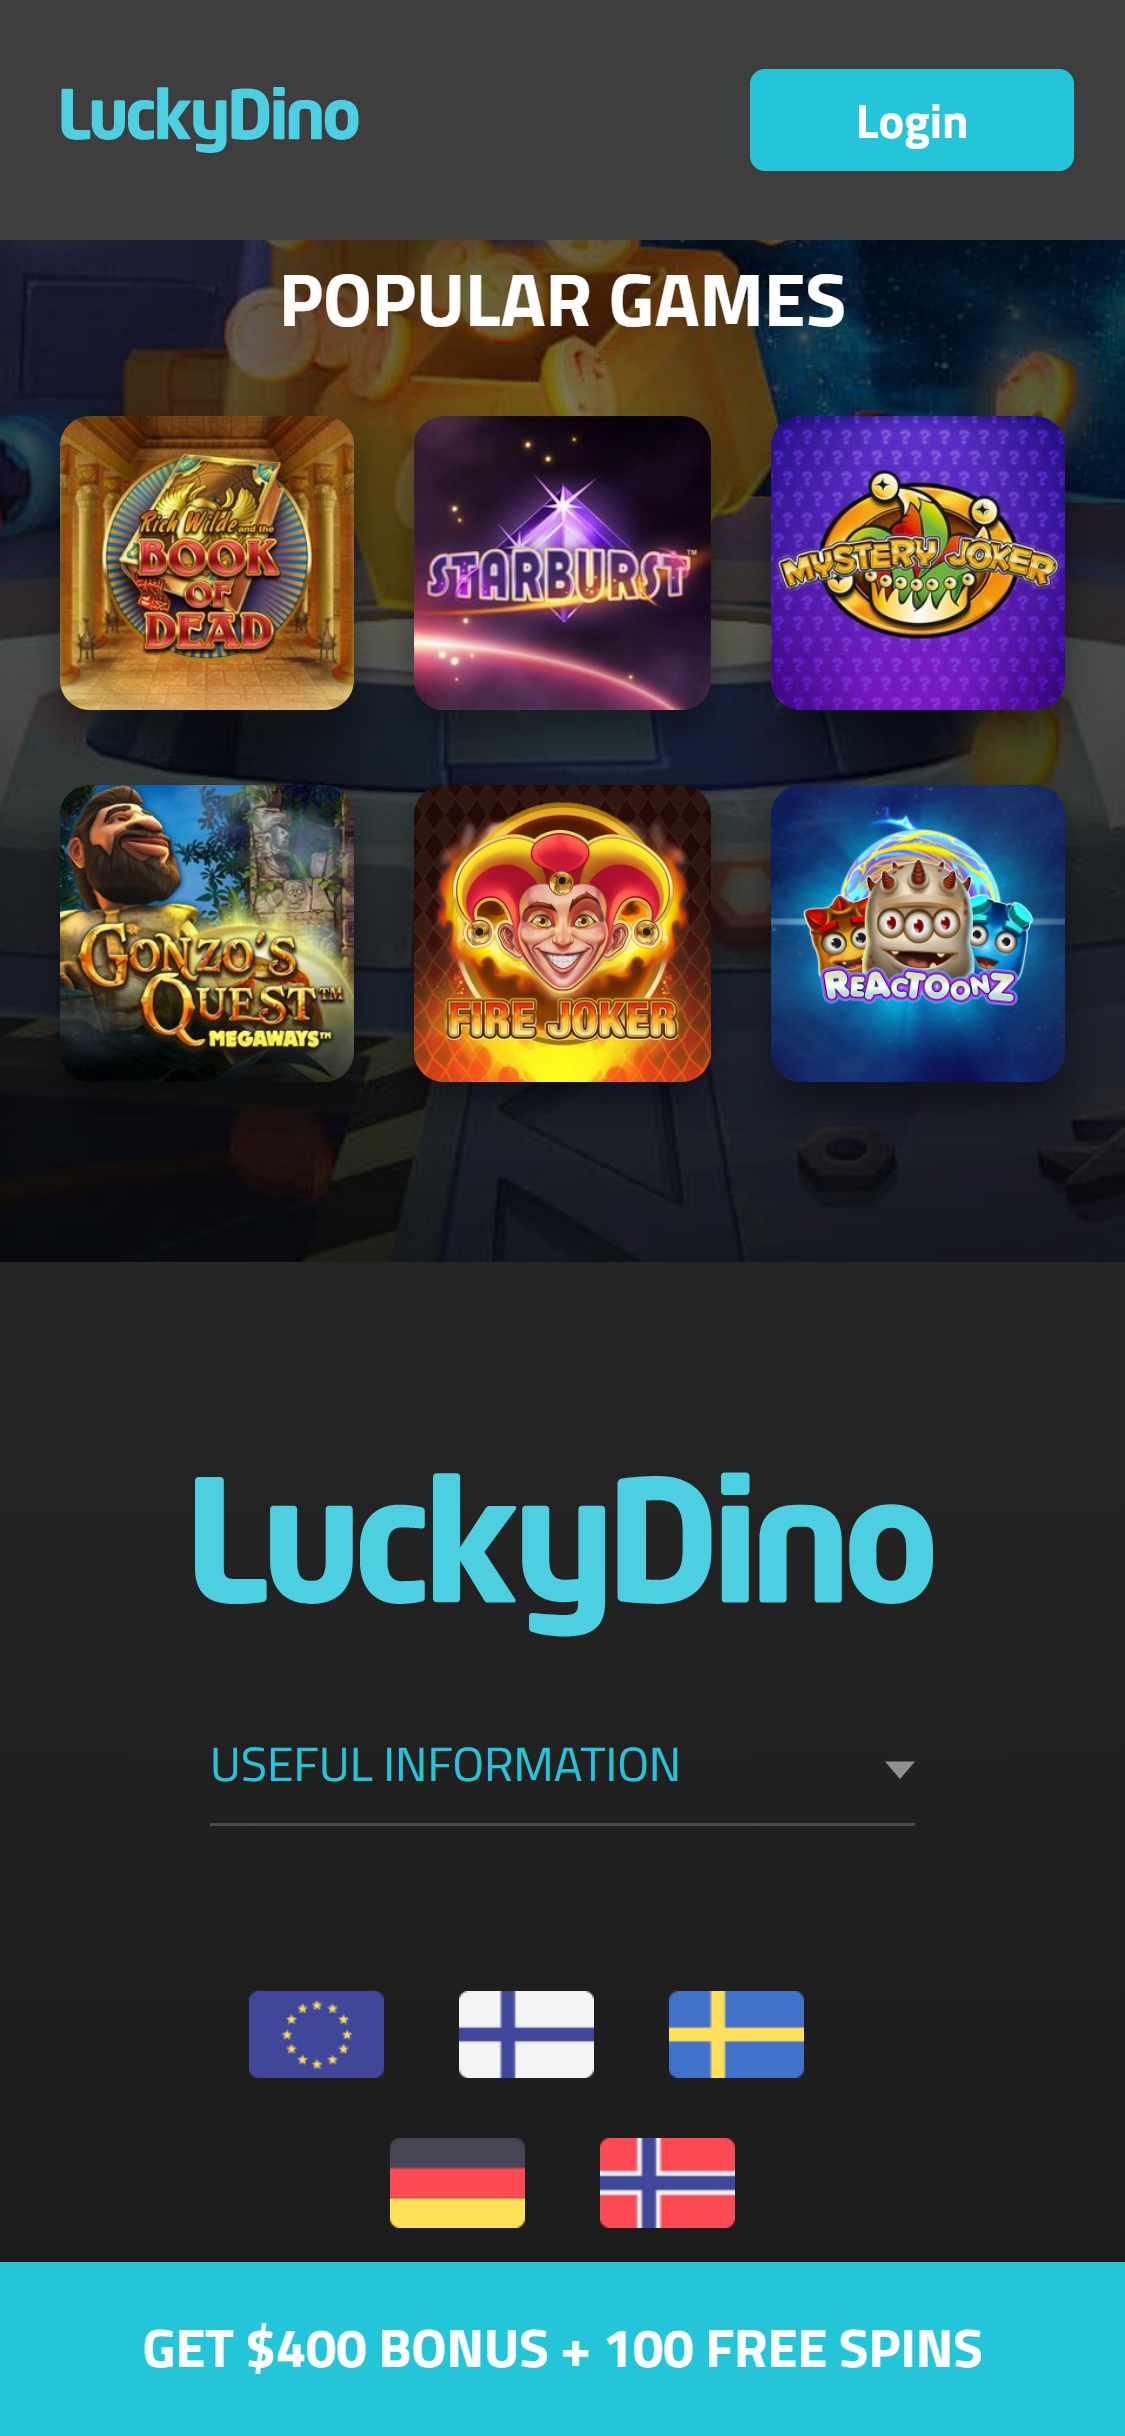 Lucky Dino Casino Mobile Games Review